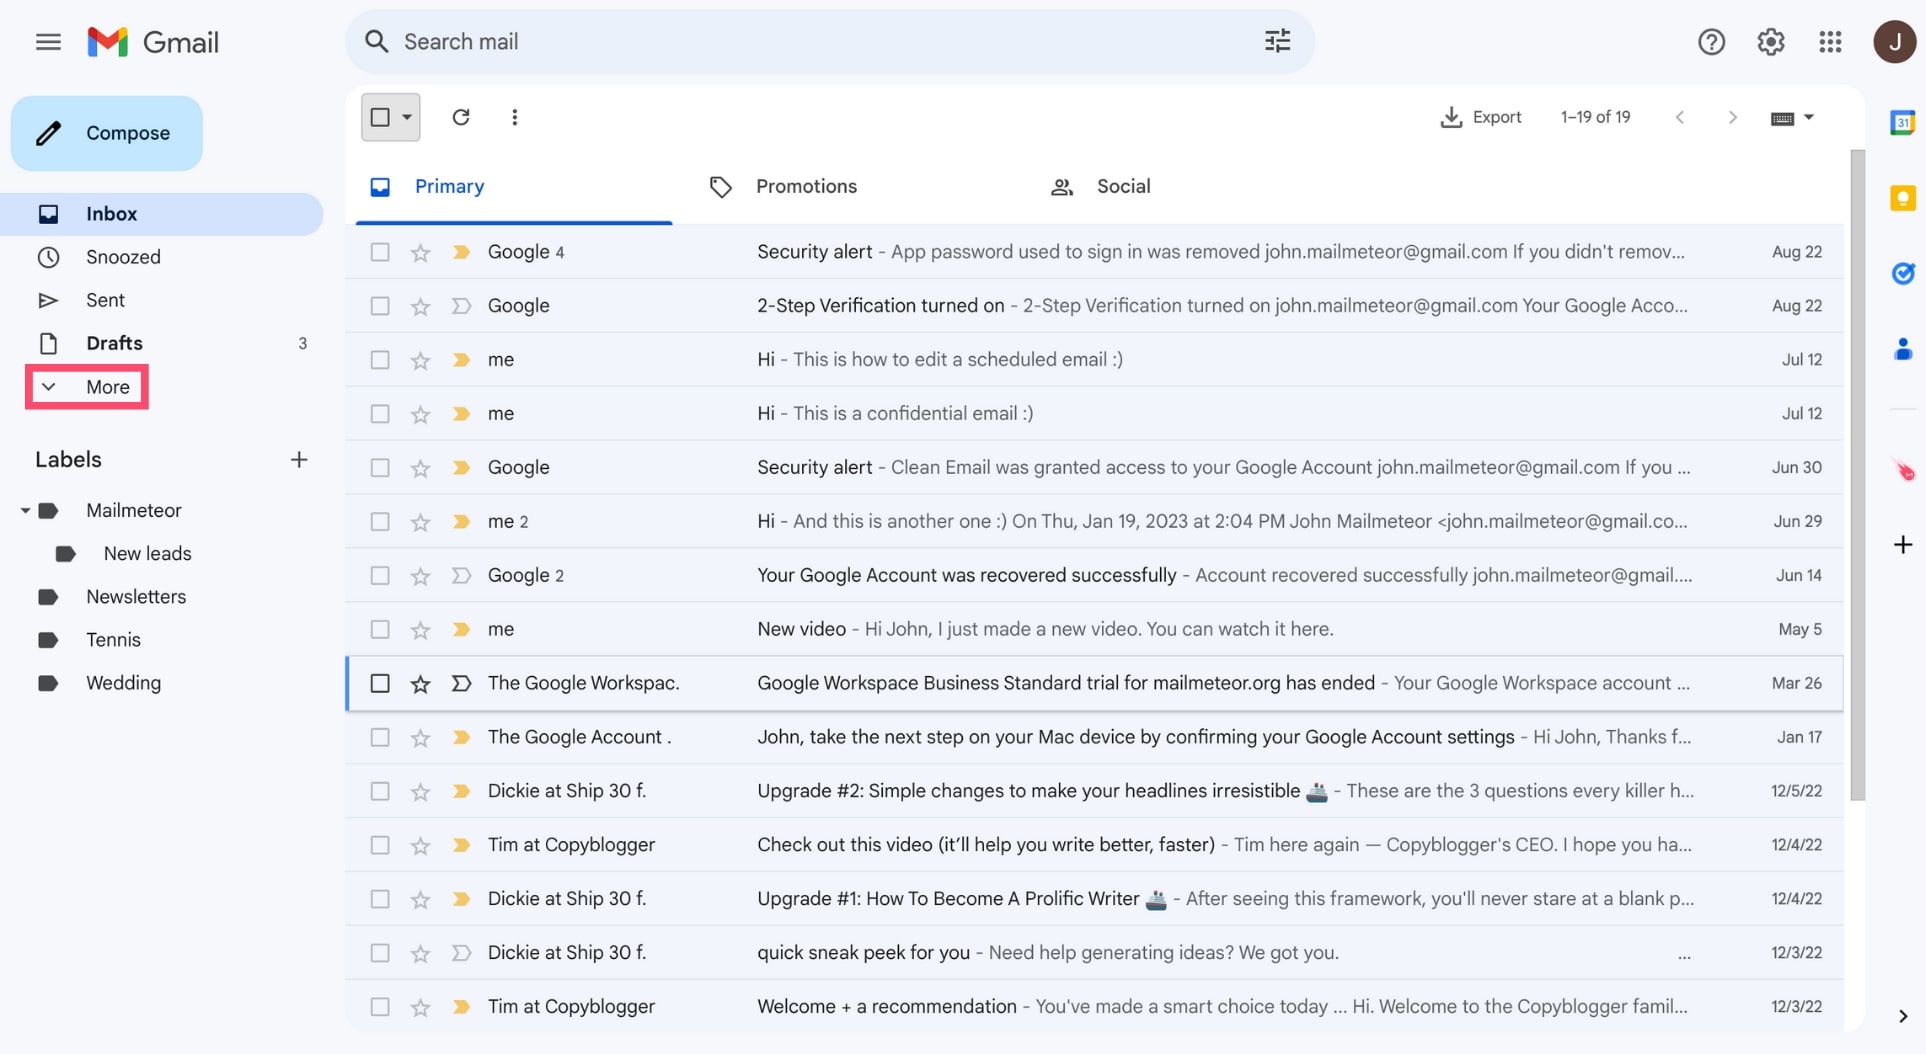 Gmail folders